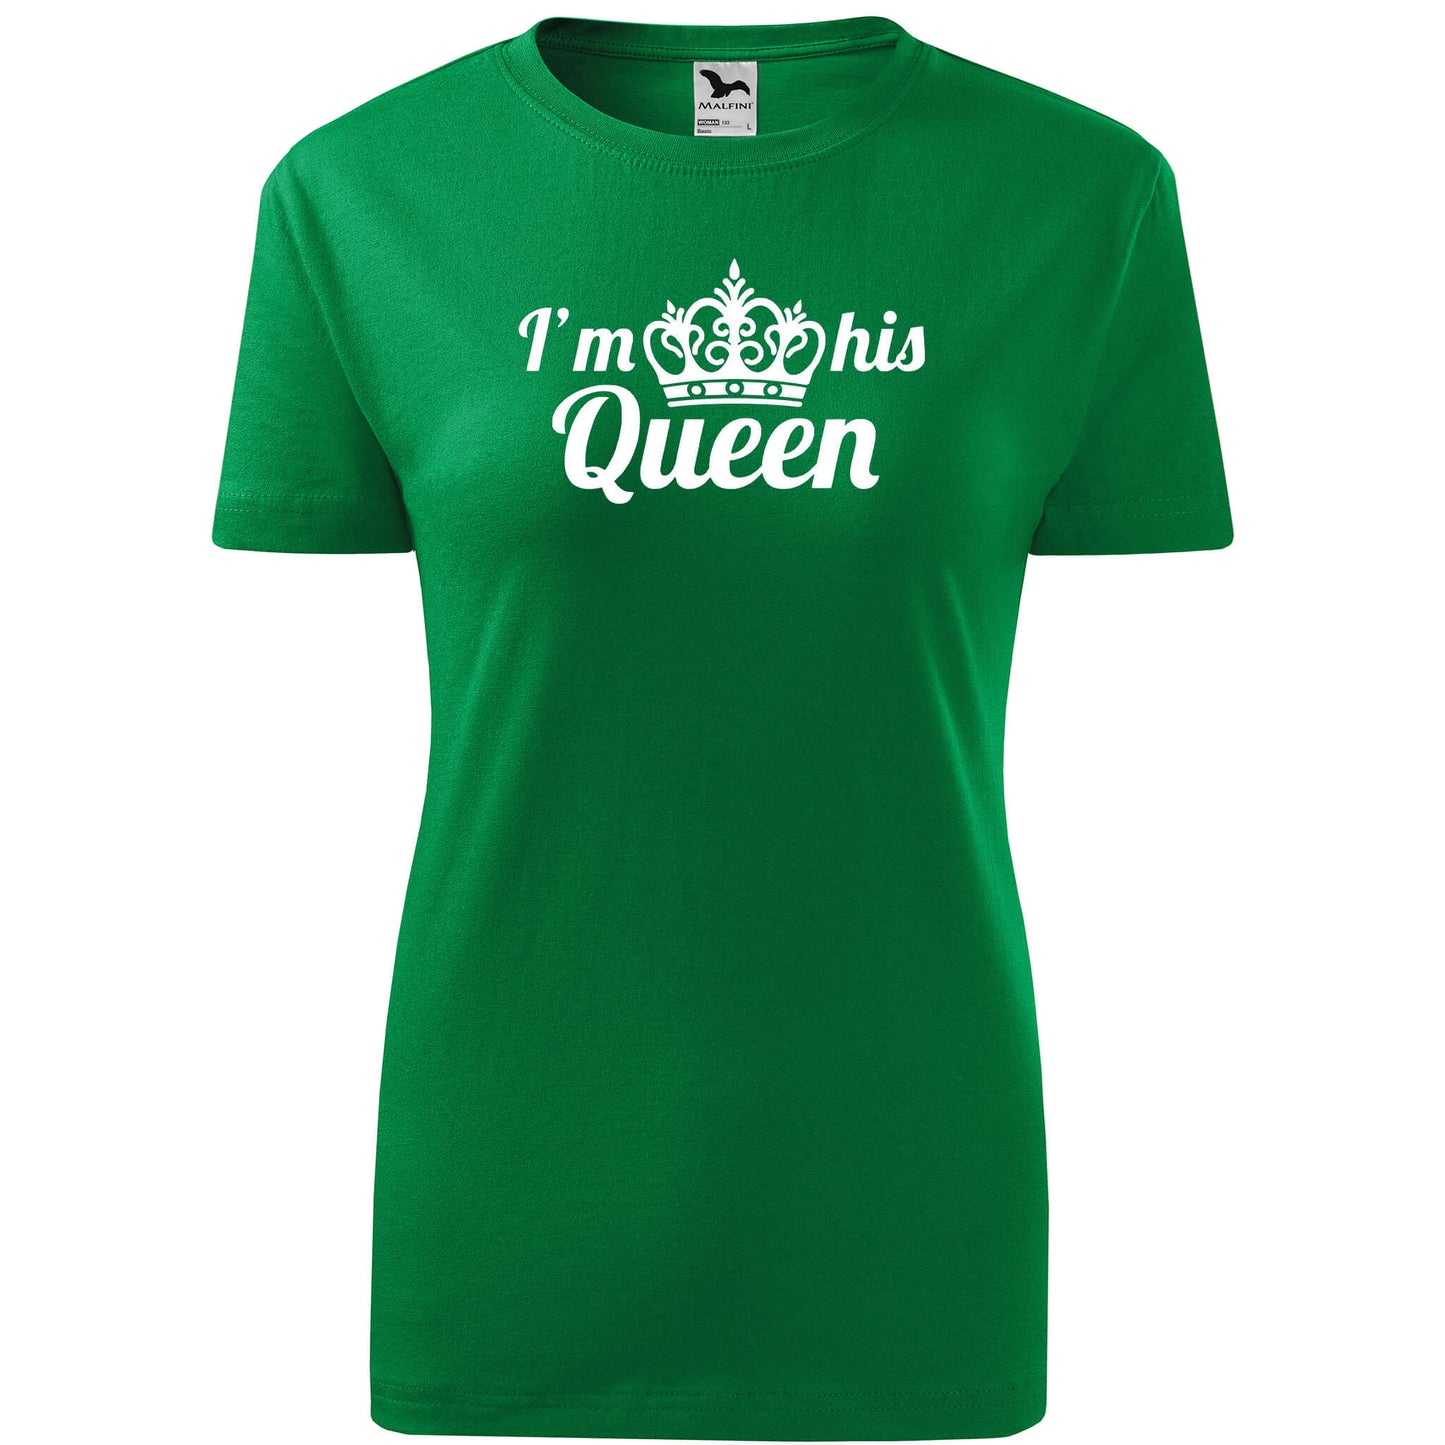 T-shirt - I'm his queen - rvdesignprint